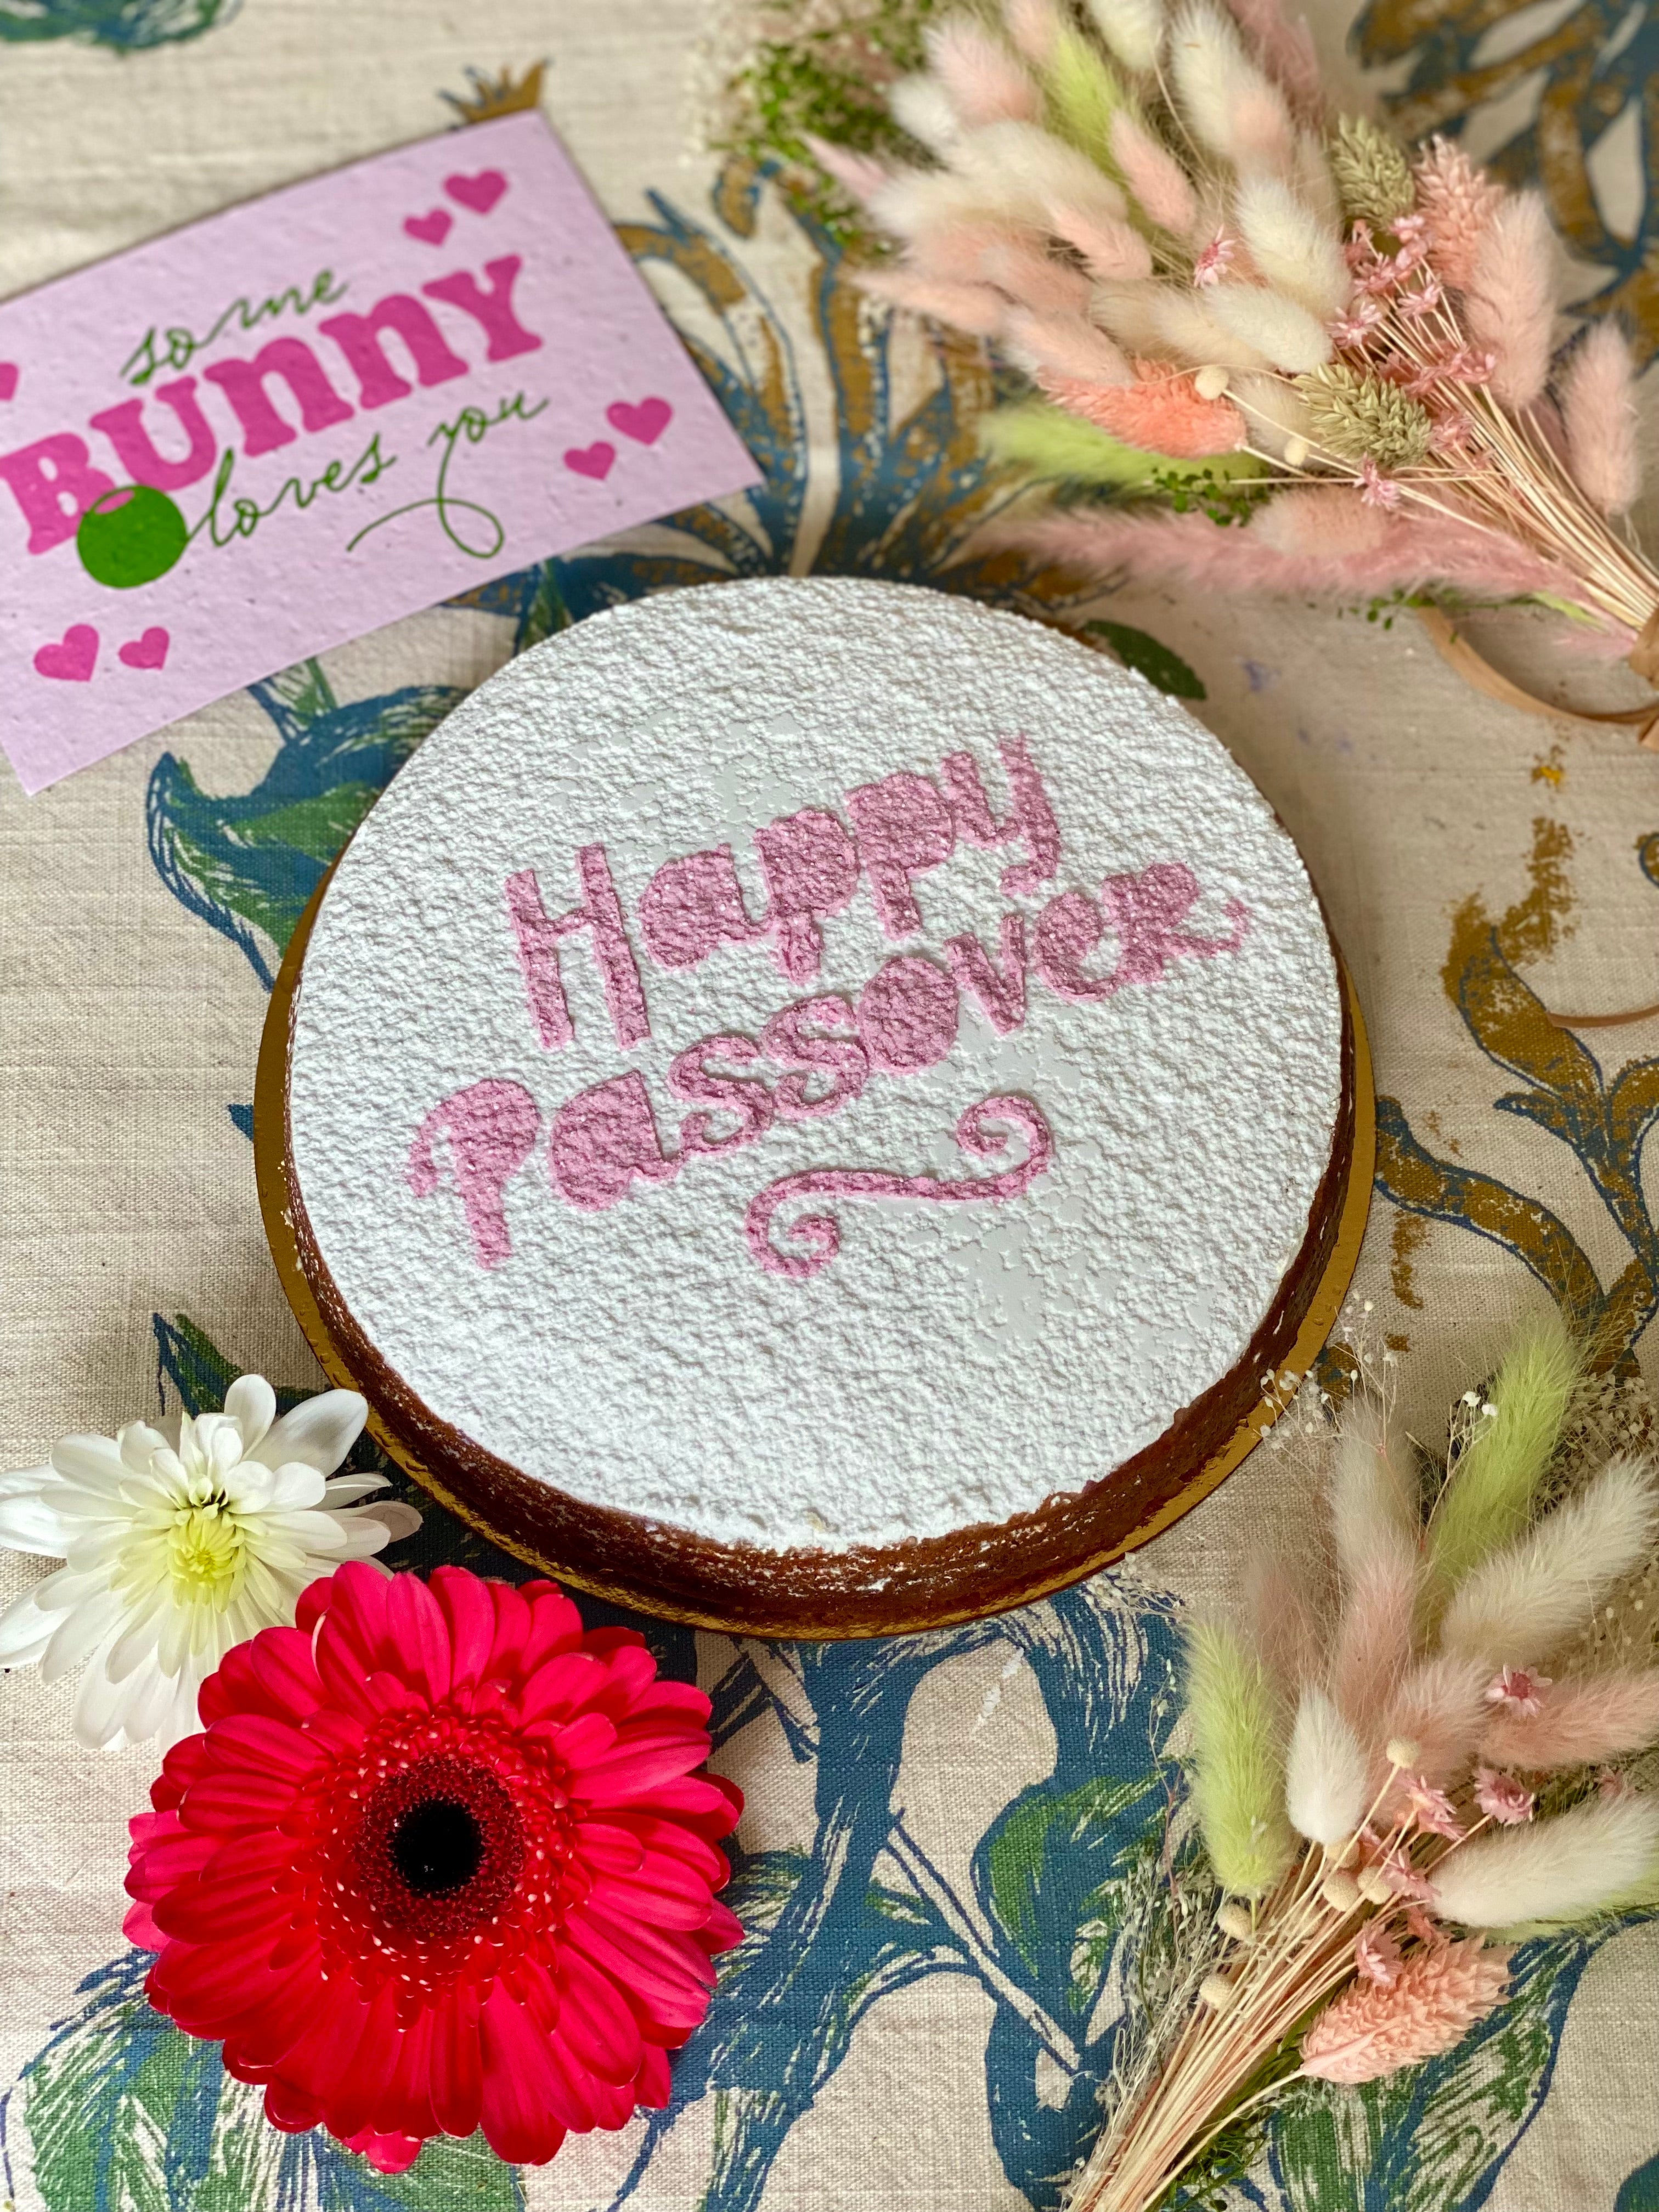 Passover Olove Cake